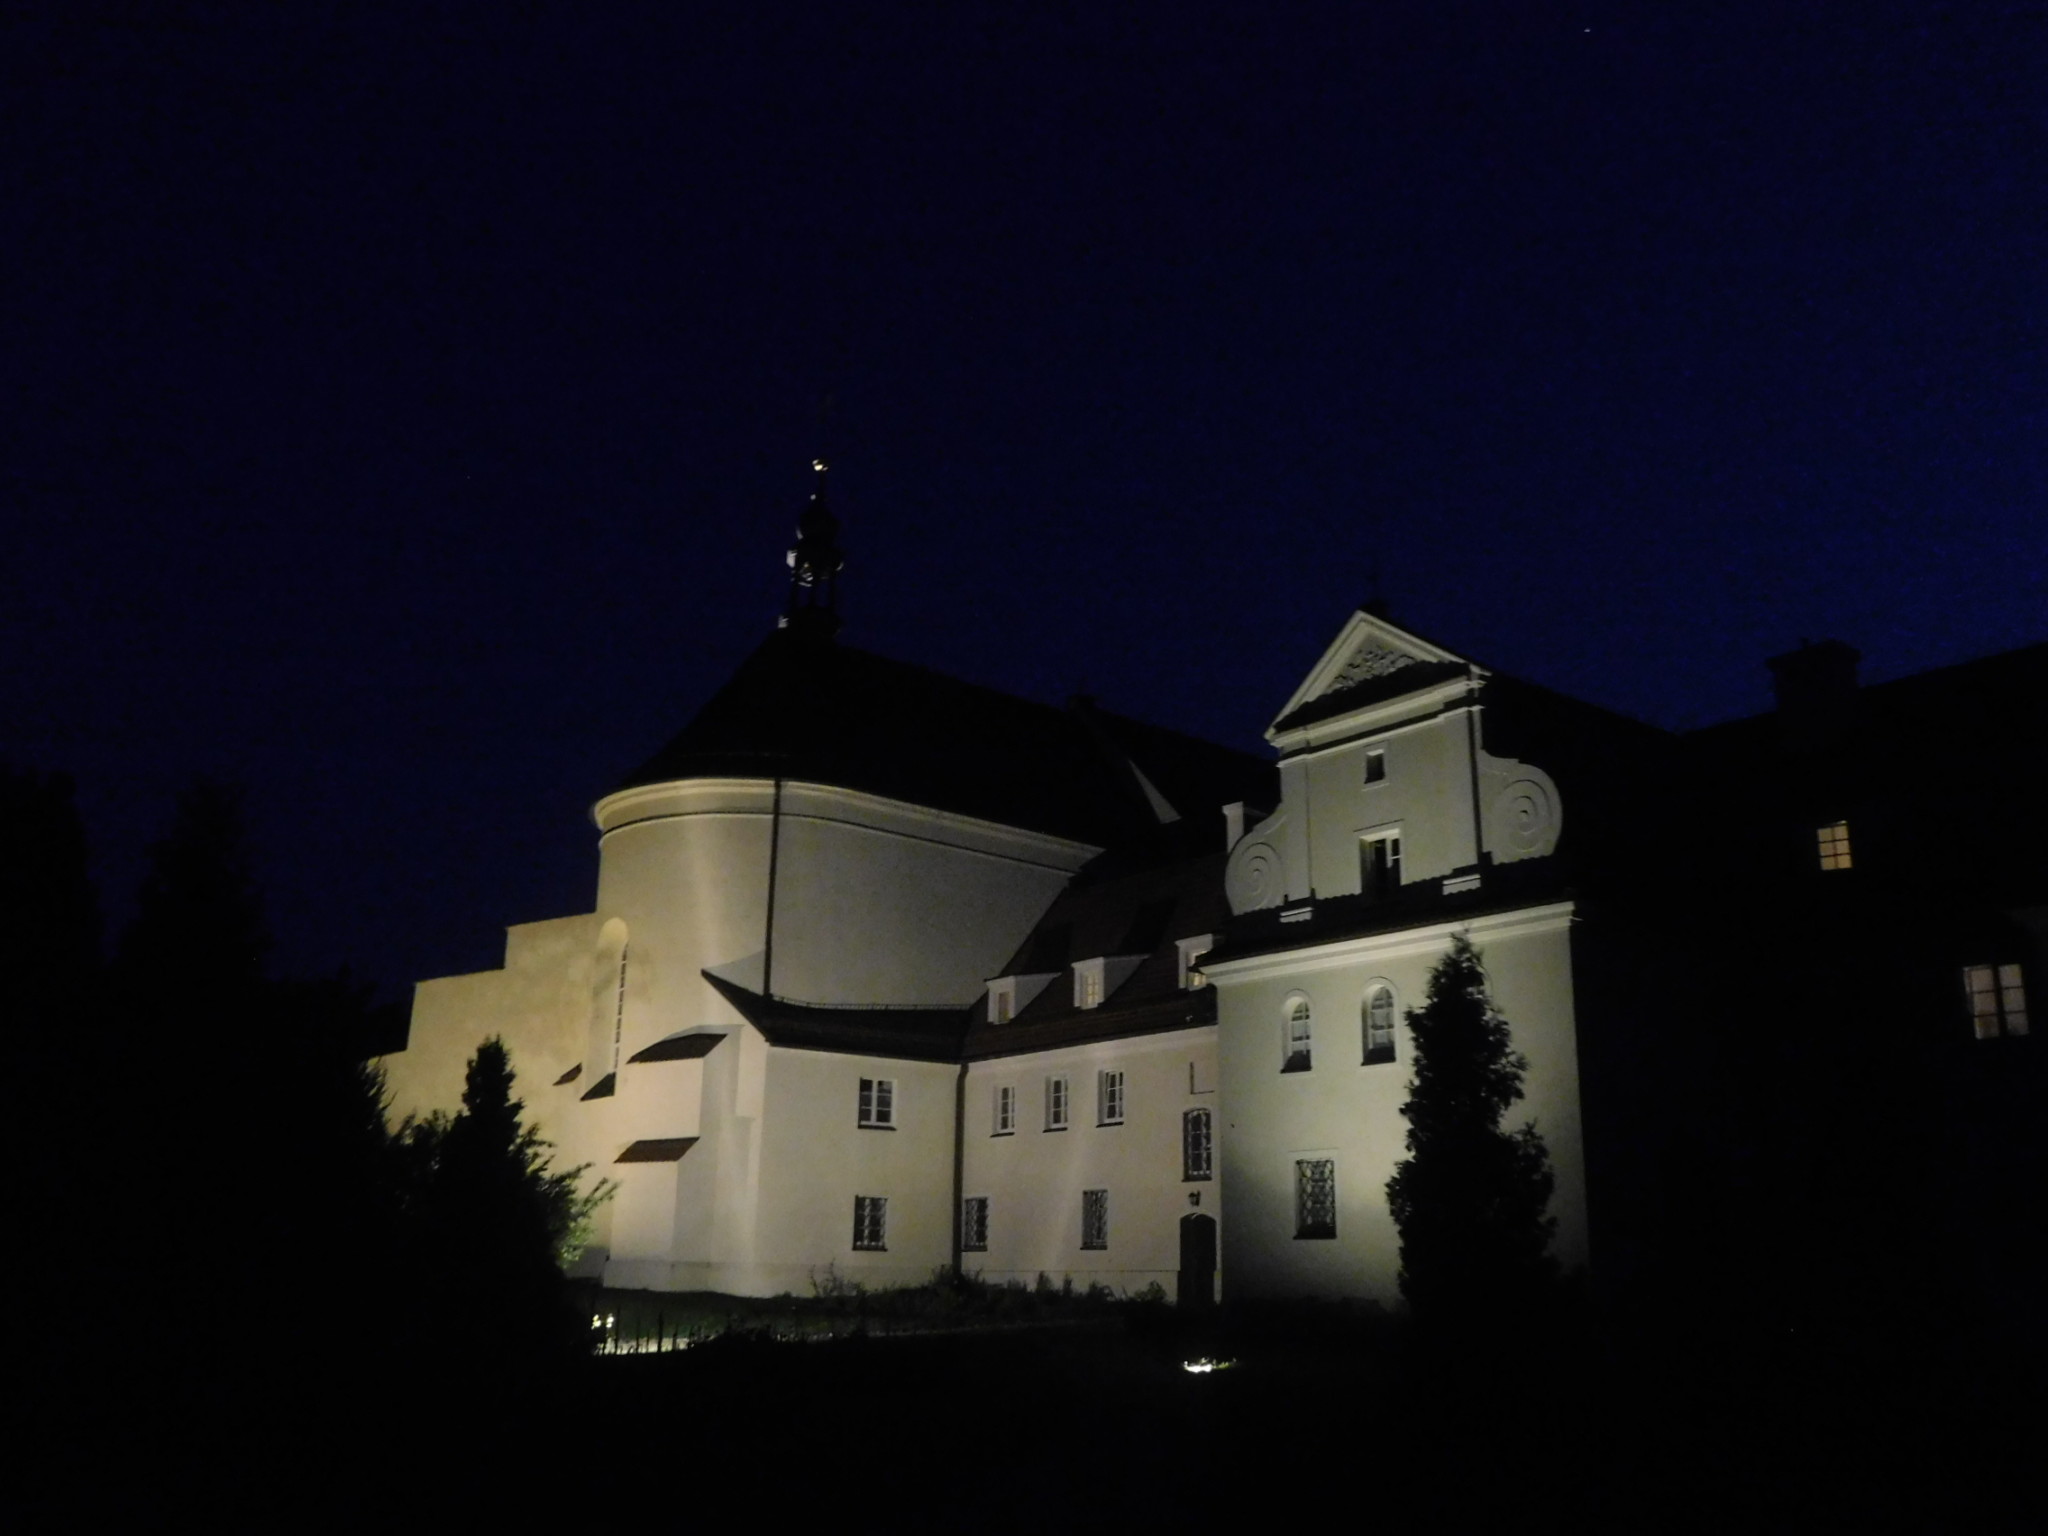 klasztor nocą (oświetlony)